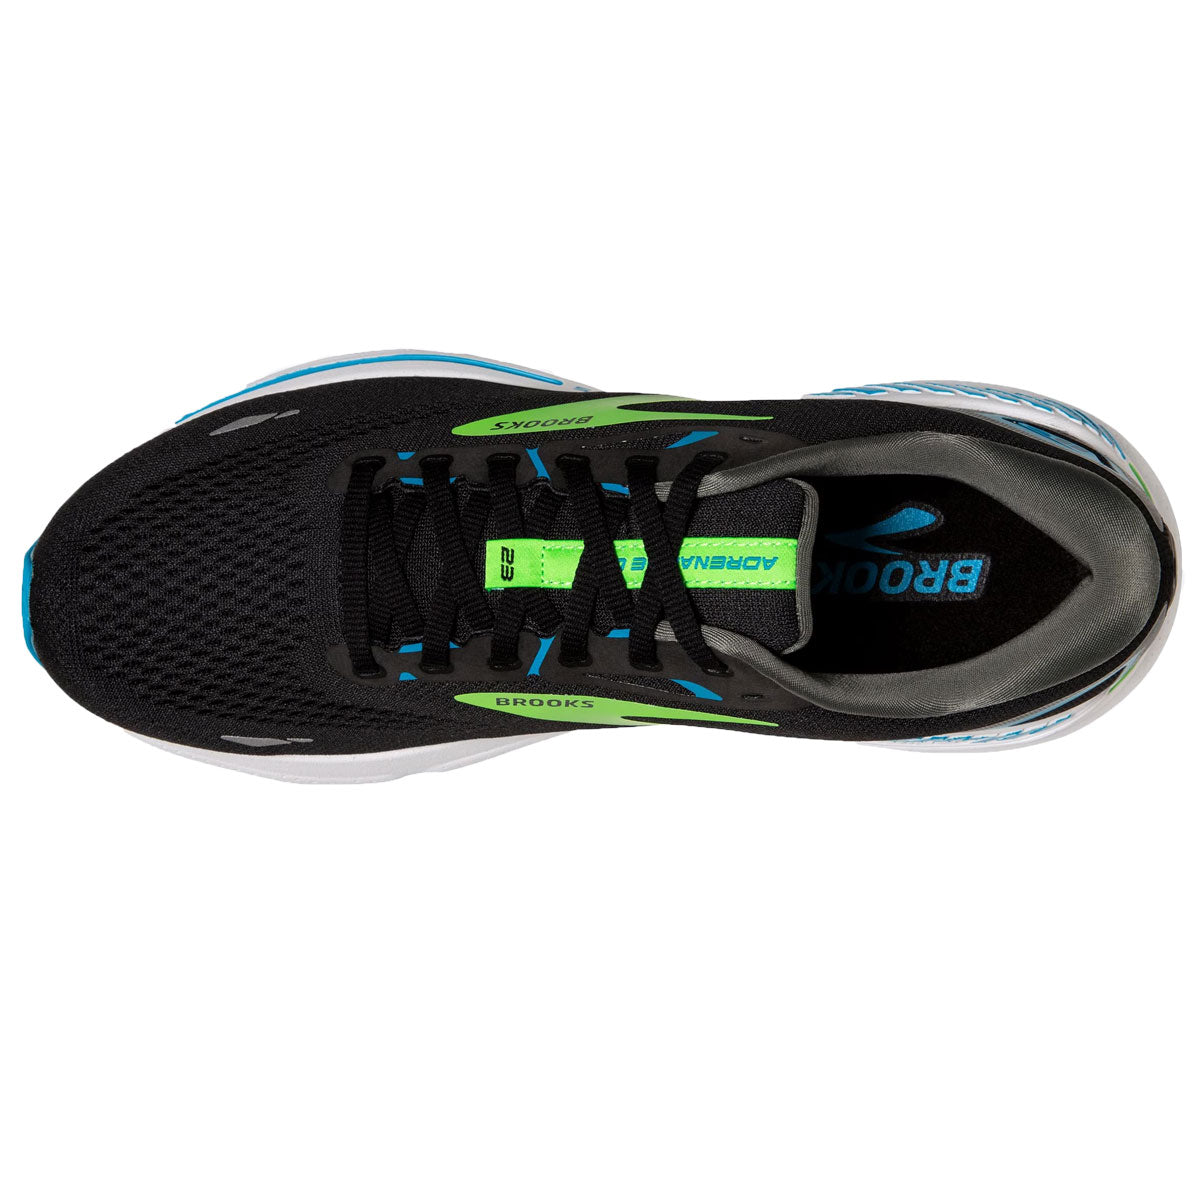 Brooks Adrenaline GTS 23 Running Shoes - Mens - Black/Hawaiian Ocean/Green